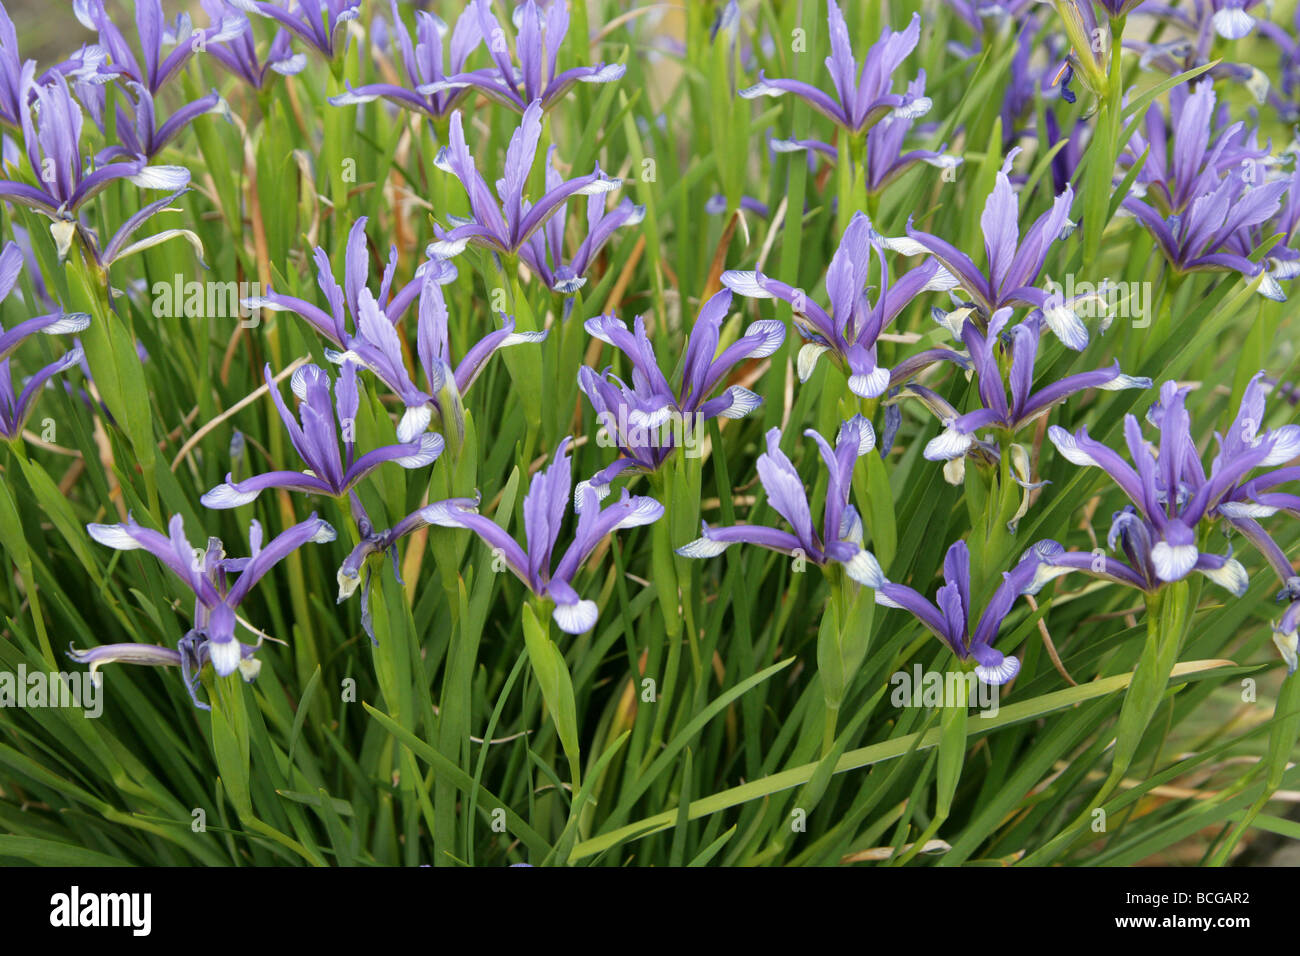 Iris sintenisii, Iridaceae, Sud Est Europa e Turchia. Foto Stock